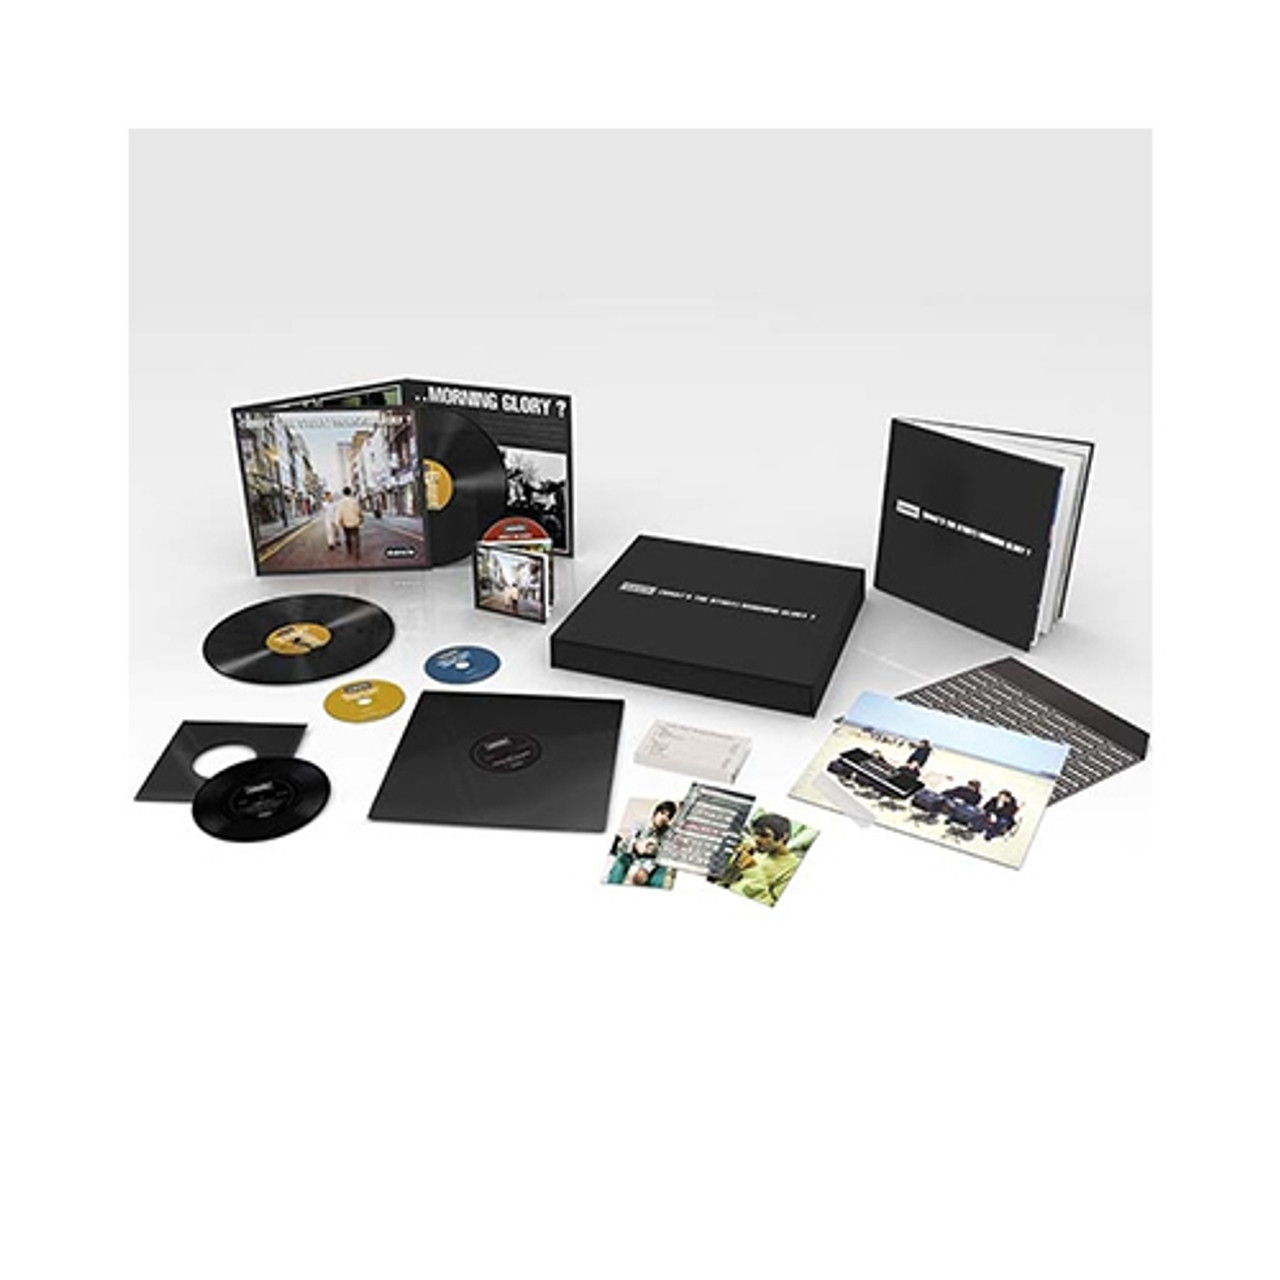 Oasis - (What's the Story) Glory (Vinyl 2LP + 3CD + 12" Vinyl EP + Box Set) * * * - Music Direct